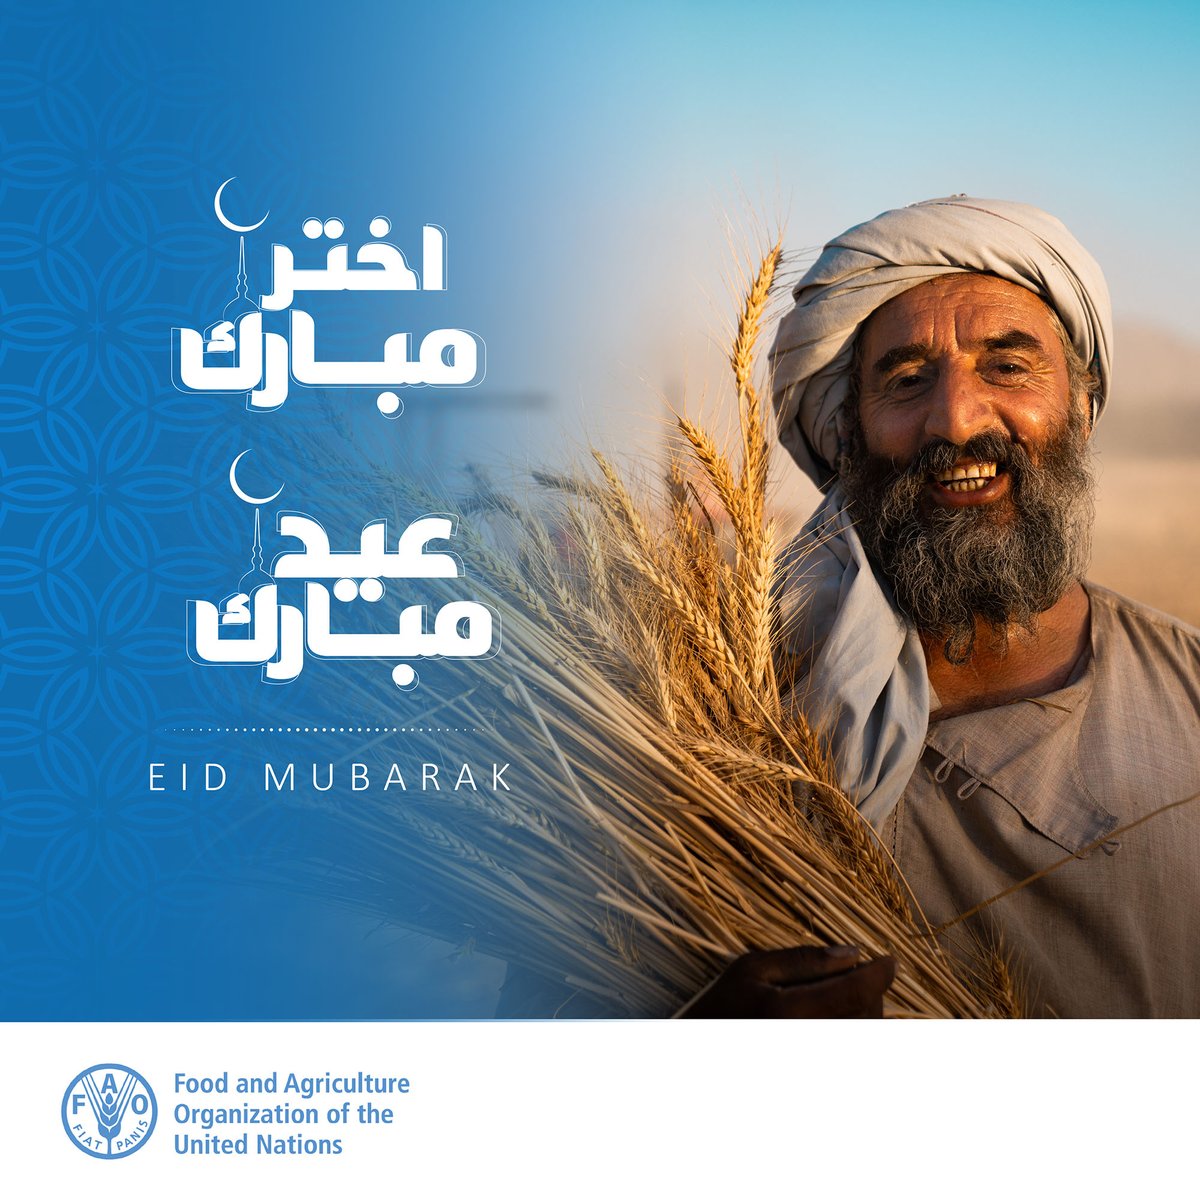 Eid/Ikhtar Mubarak to all Afghan farmers! We wish them nice spring rains and a good harvest.